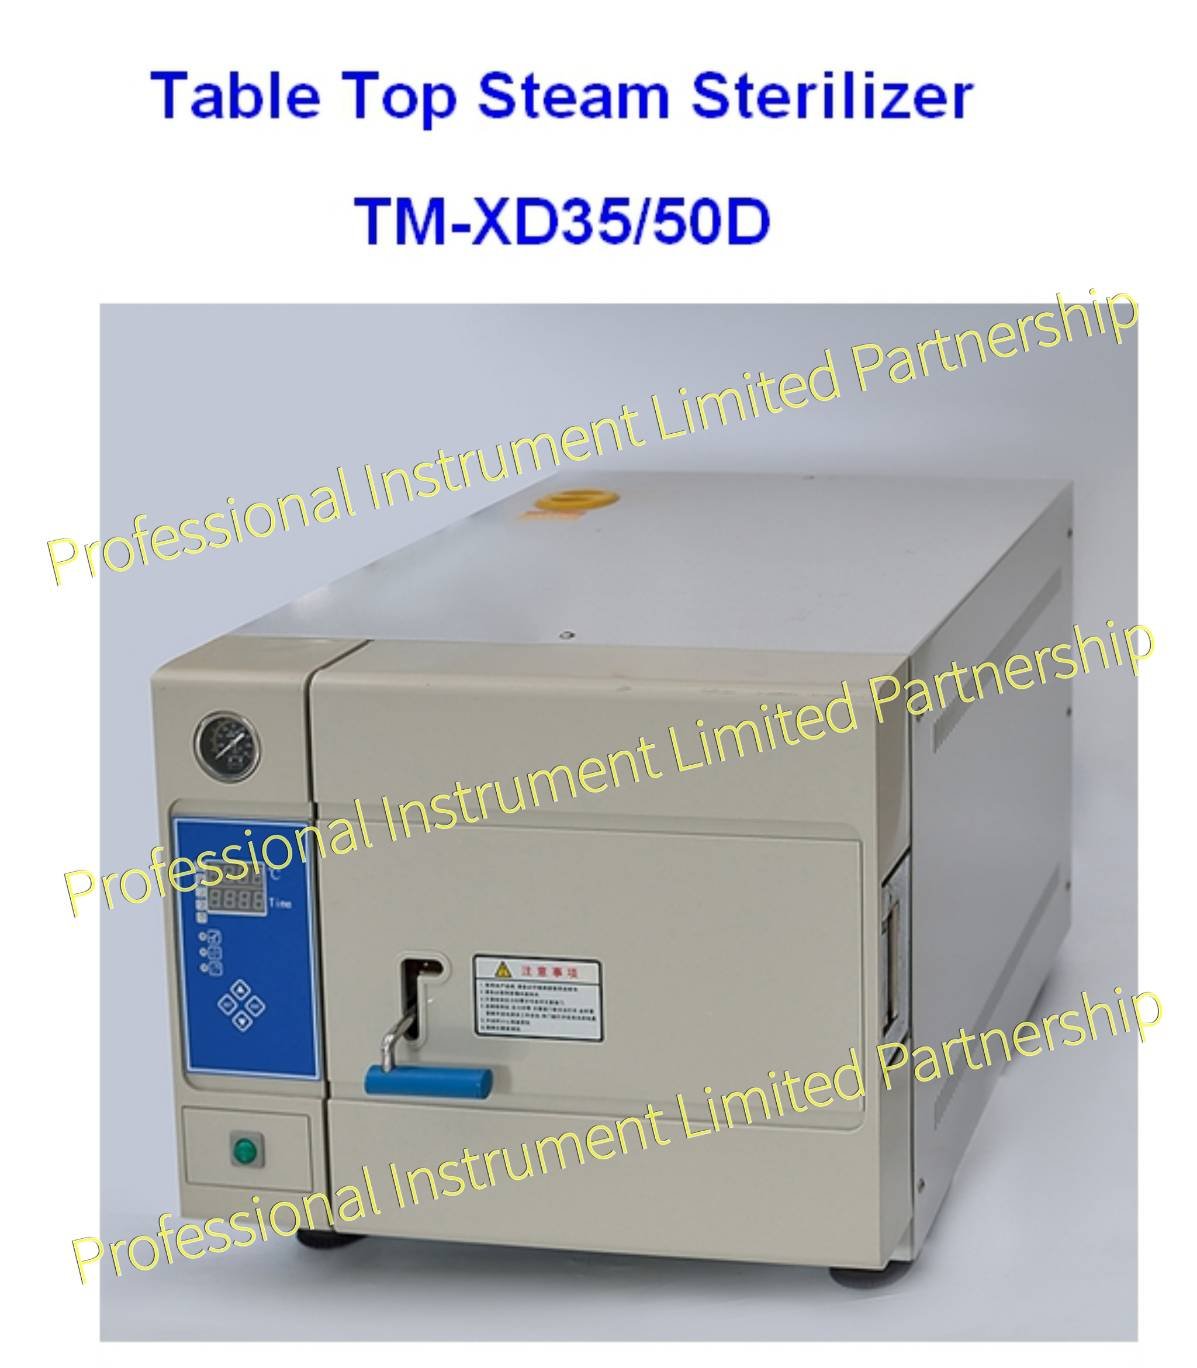 TABLE TOP STEAM STERILIZER TM-XD35/50D